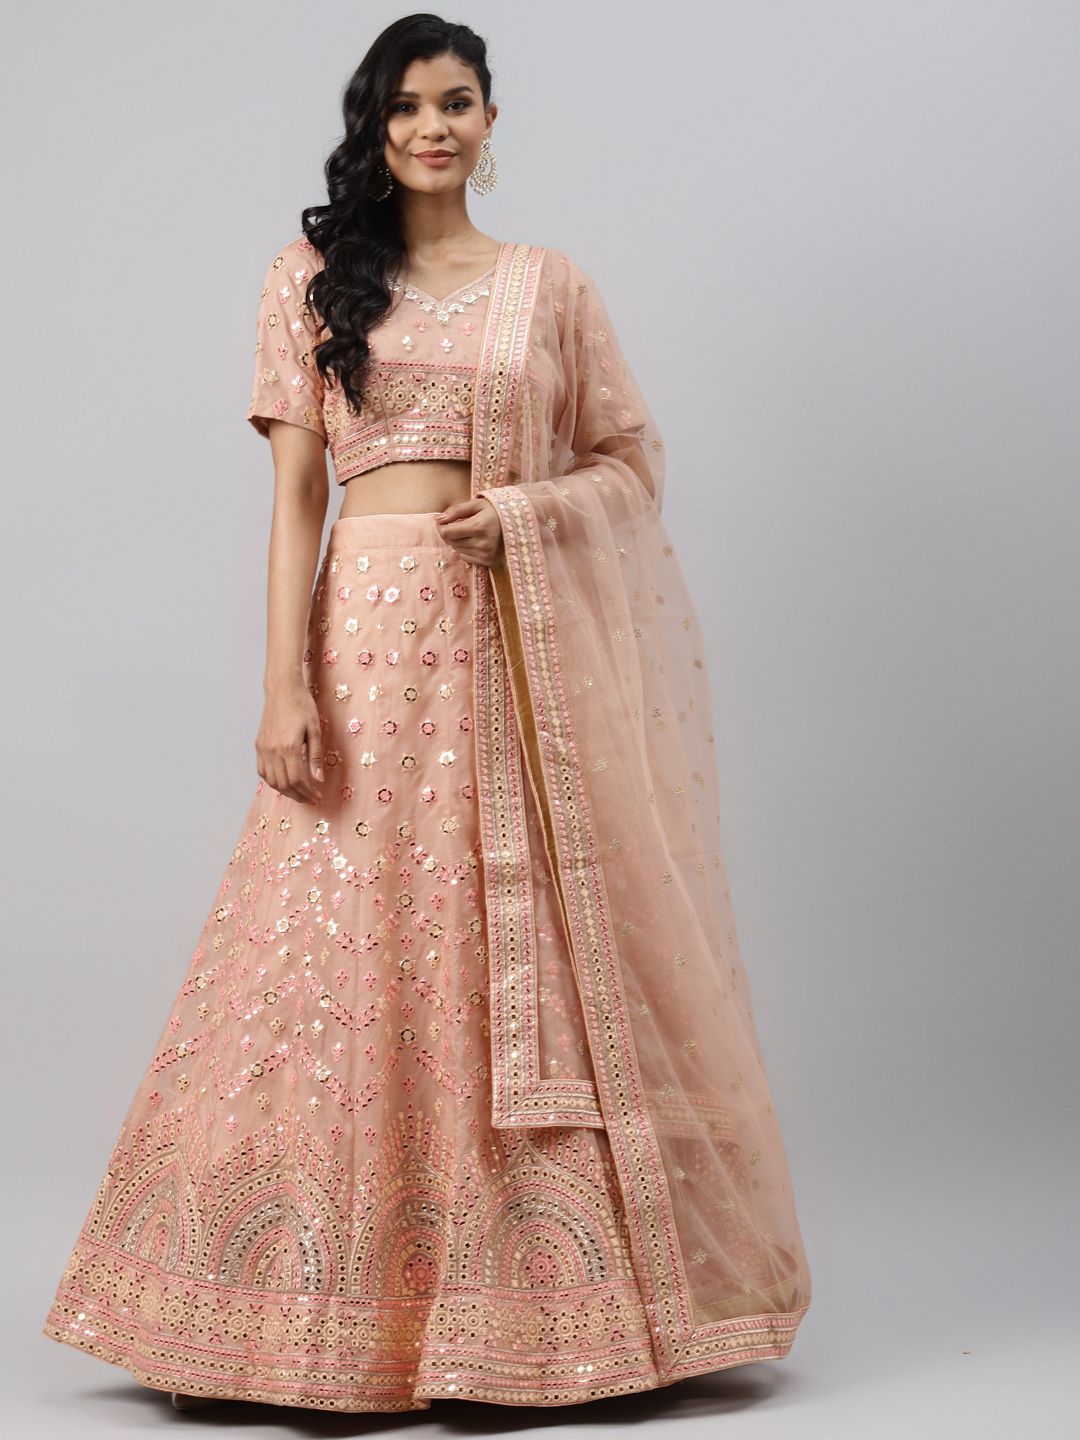 Readiprint Fashions Peach-Coloured Semi-Stitched Lehenga & Unstitched Blouse & Dupatta Price in India